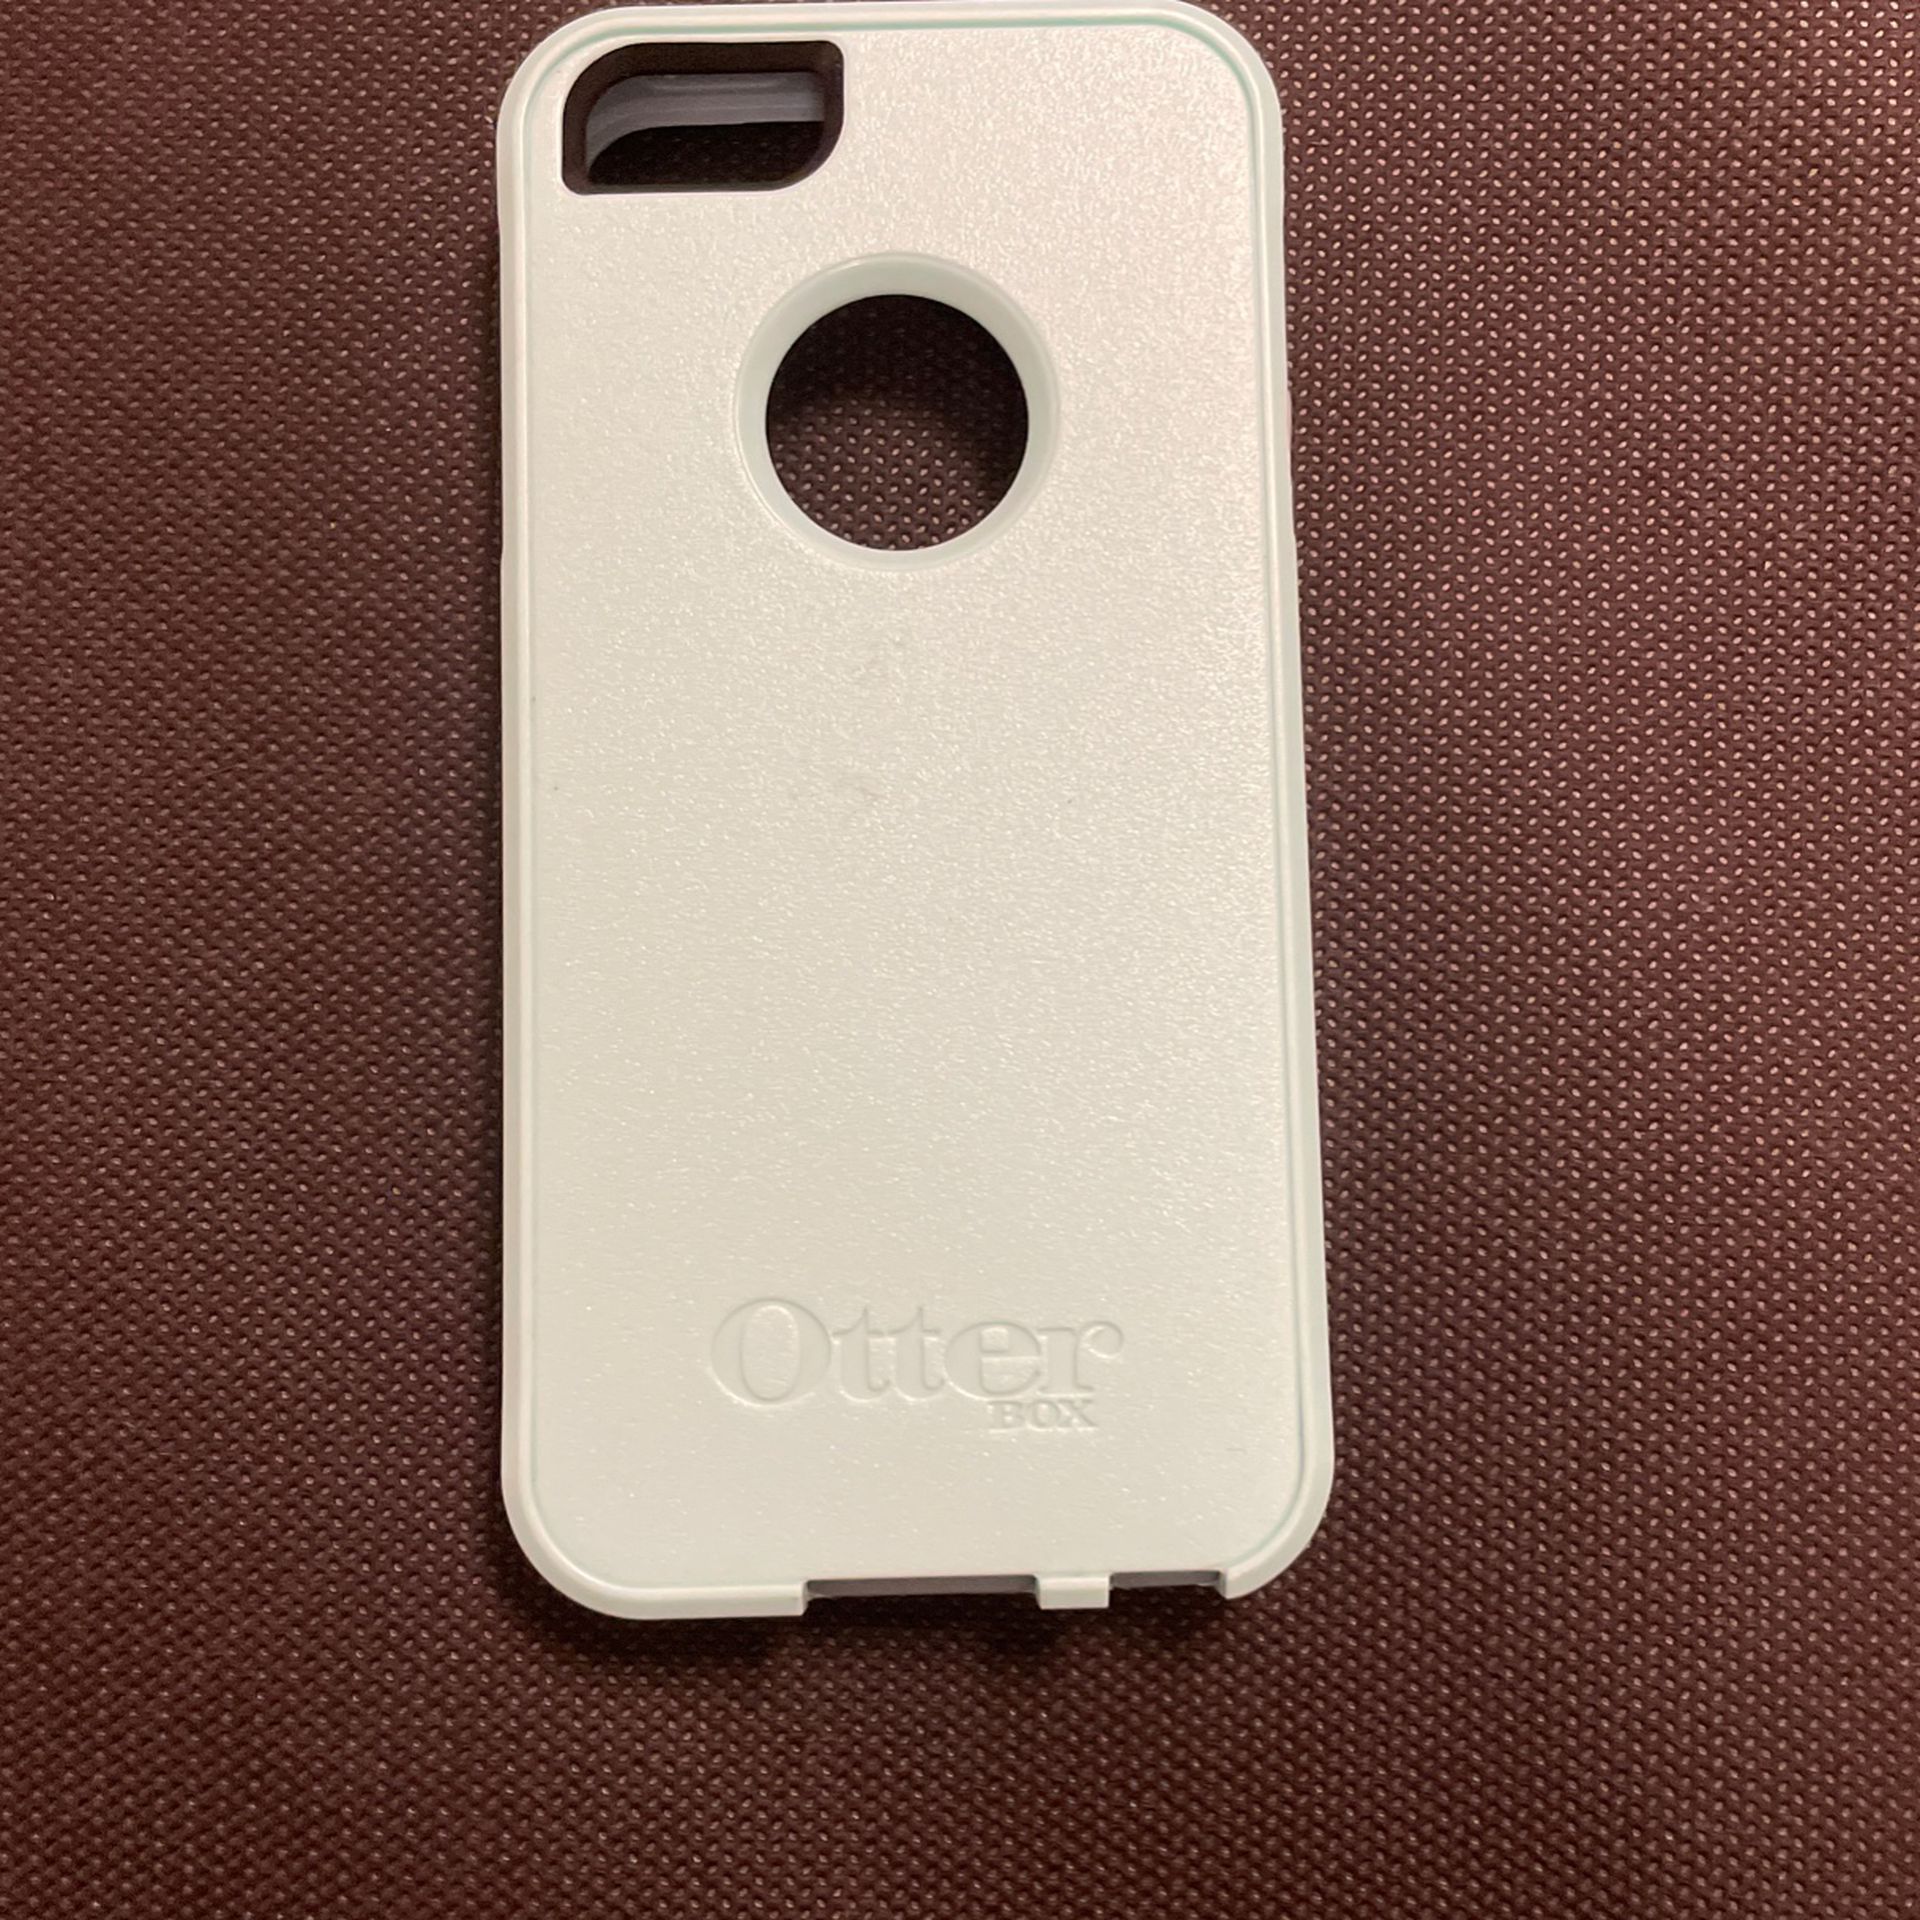 Iphone 5 Otter Box case